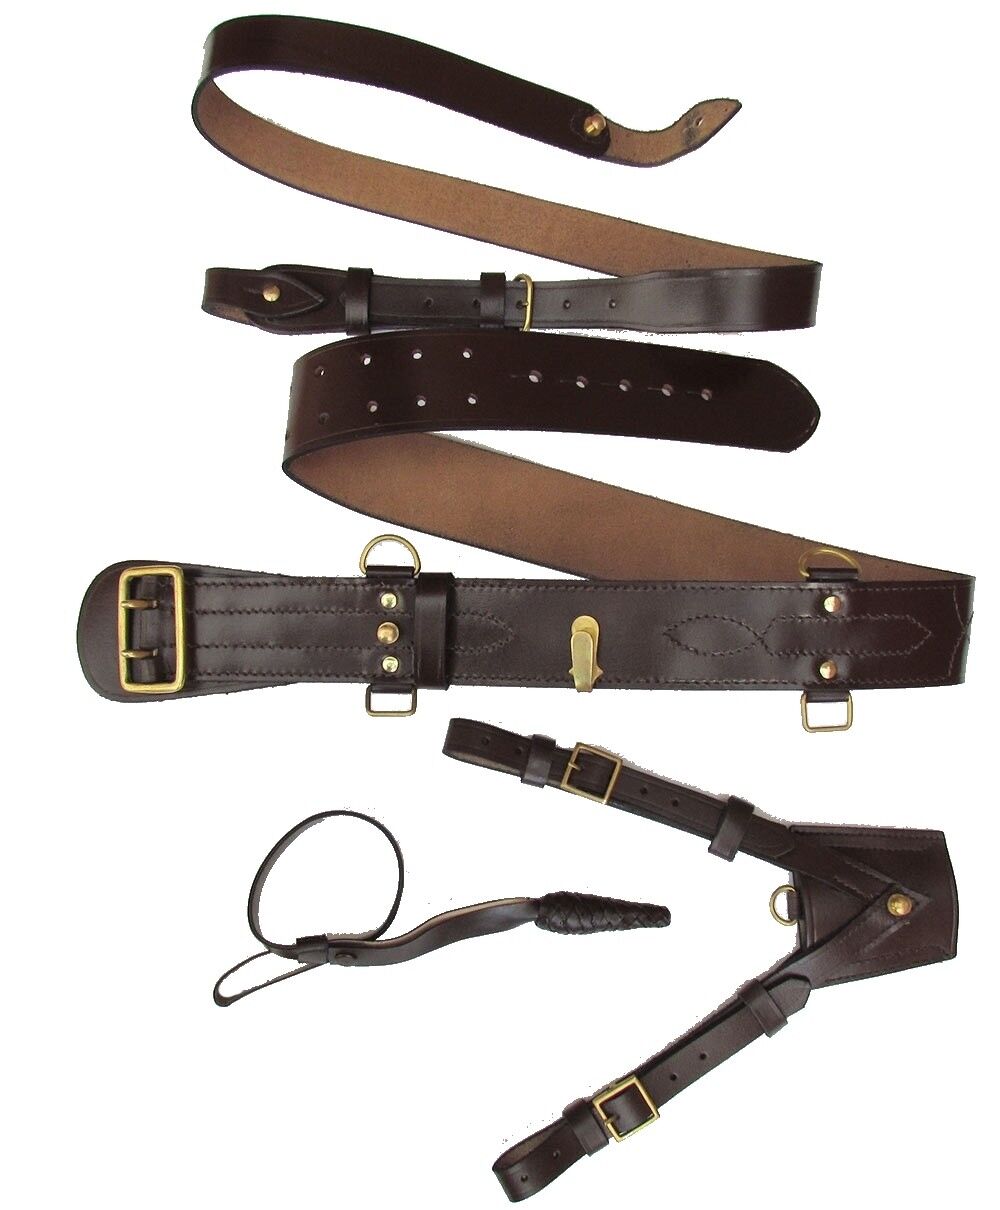 Sam Browne Belt, Sword Frog, Sword Knot, Brown leather Uniform Accessories R145B